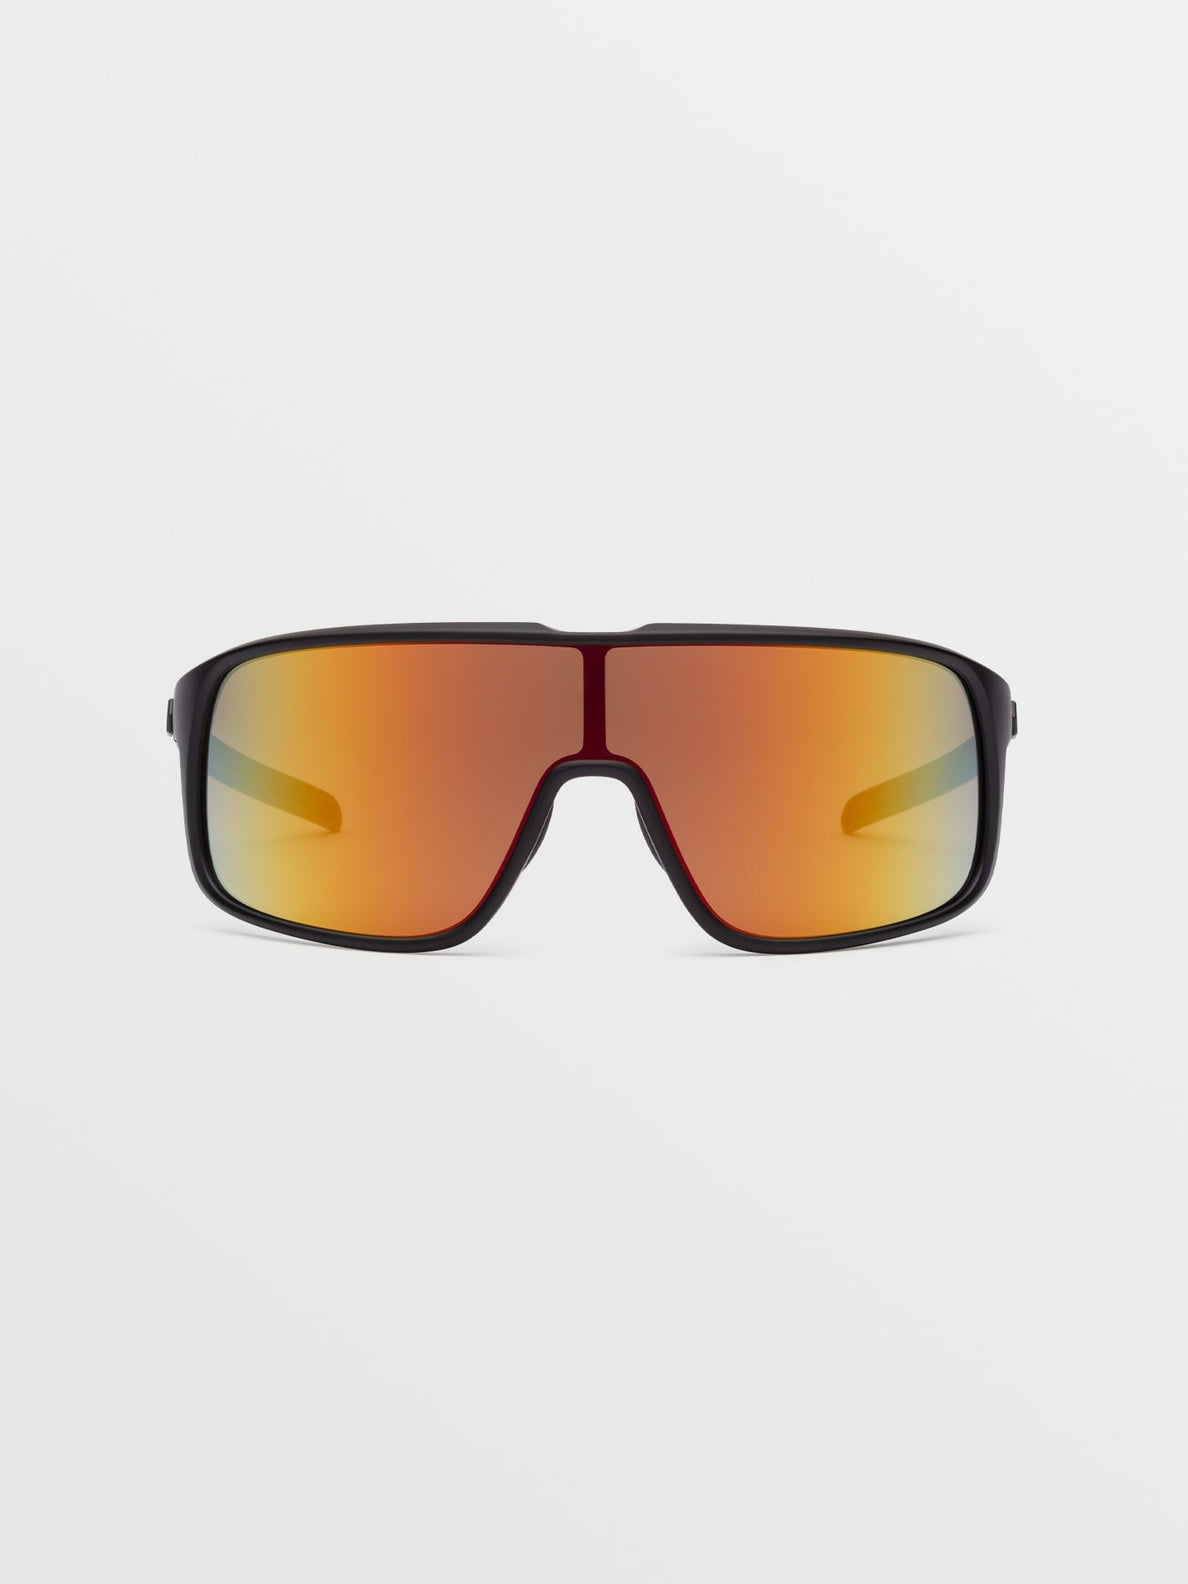 Macho Matte Black Sunglasses (Gray Red Lens) - GRAY RED CHROME (VE03500117_0000) [B]